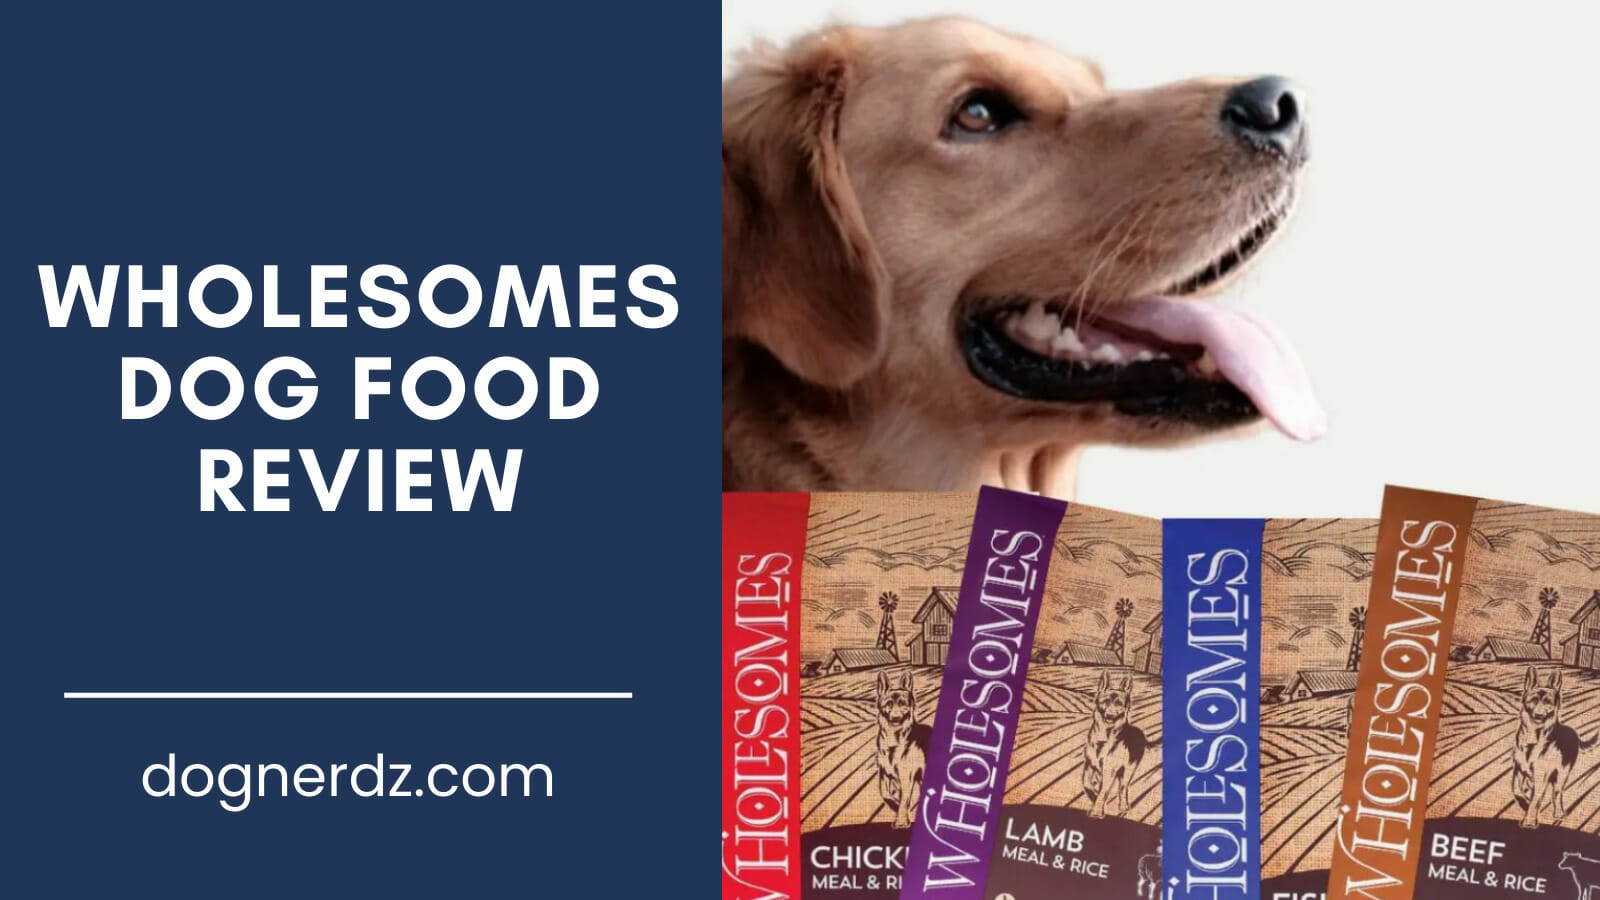 wholesomes dog food reviews